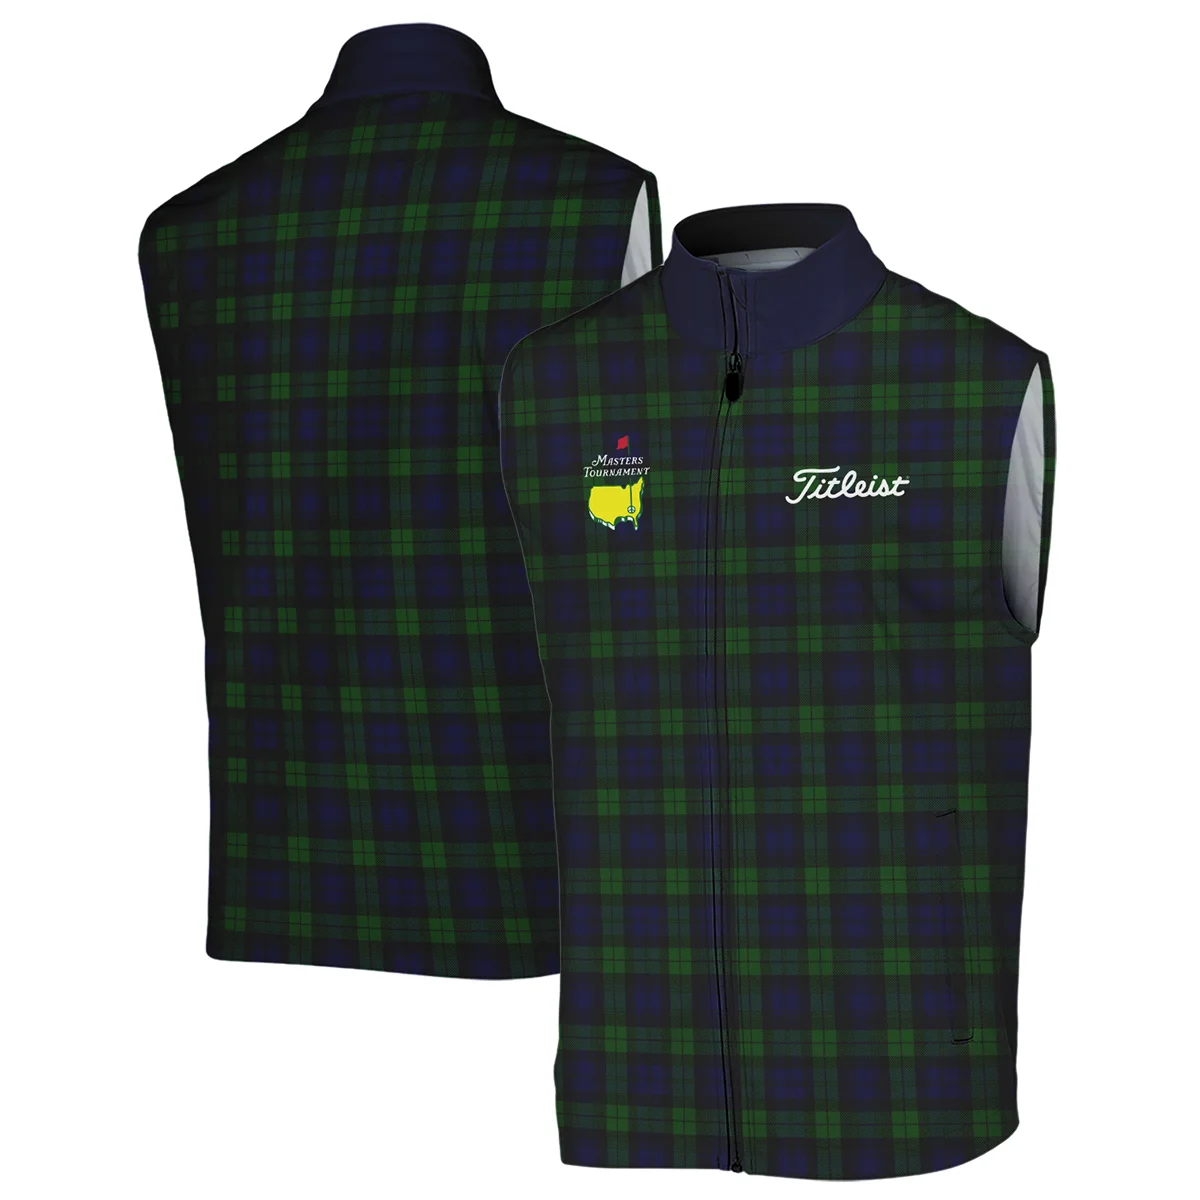 Masters Tournament Titleist Golf Bomber Jacket Sports Green Purple Black Watch Tartan Plaid All Over Print Bomber Jacket